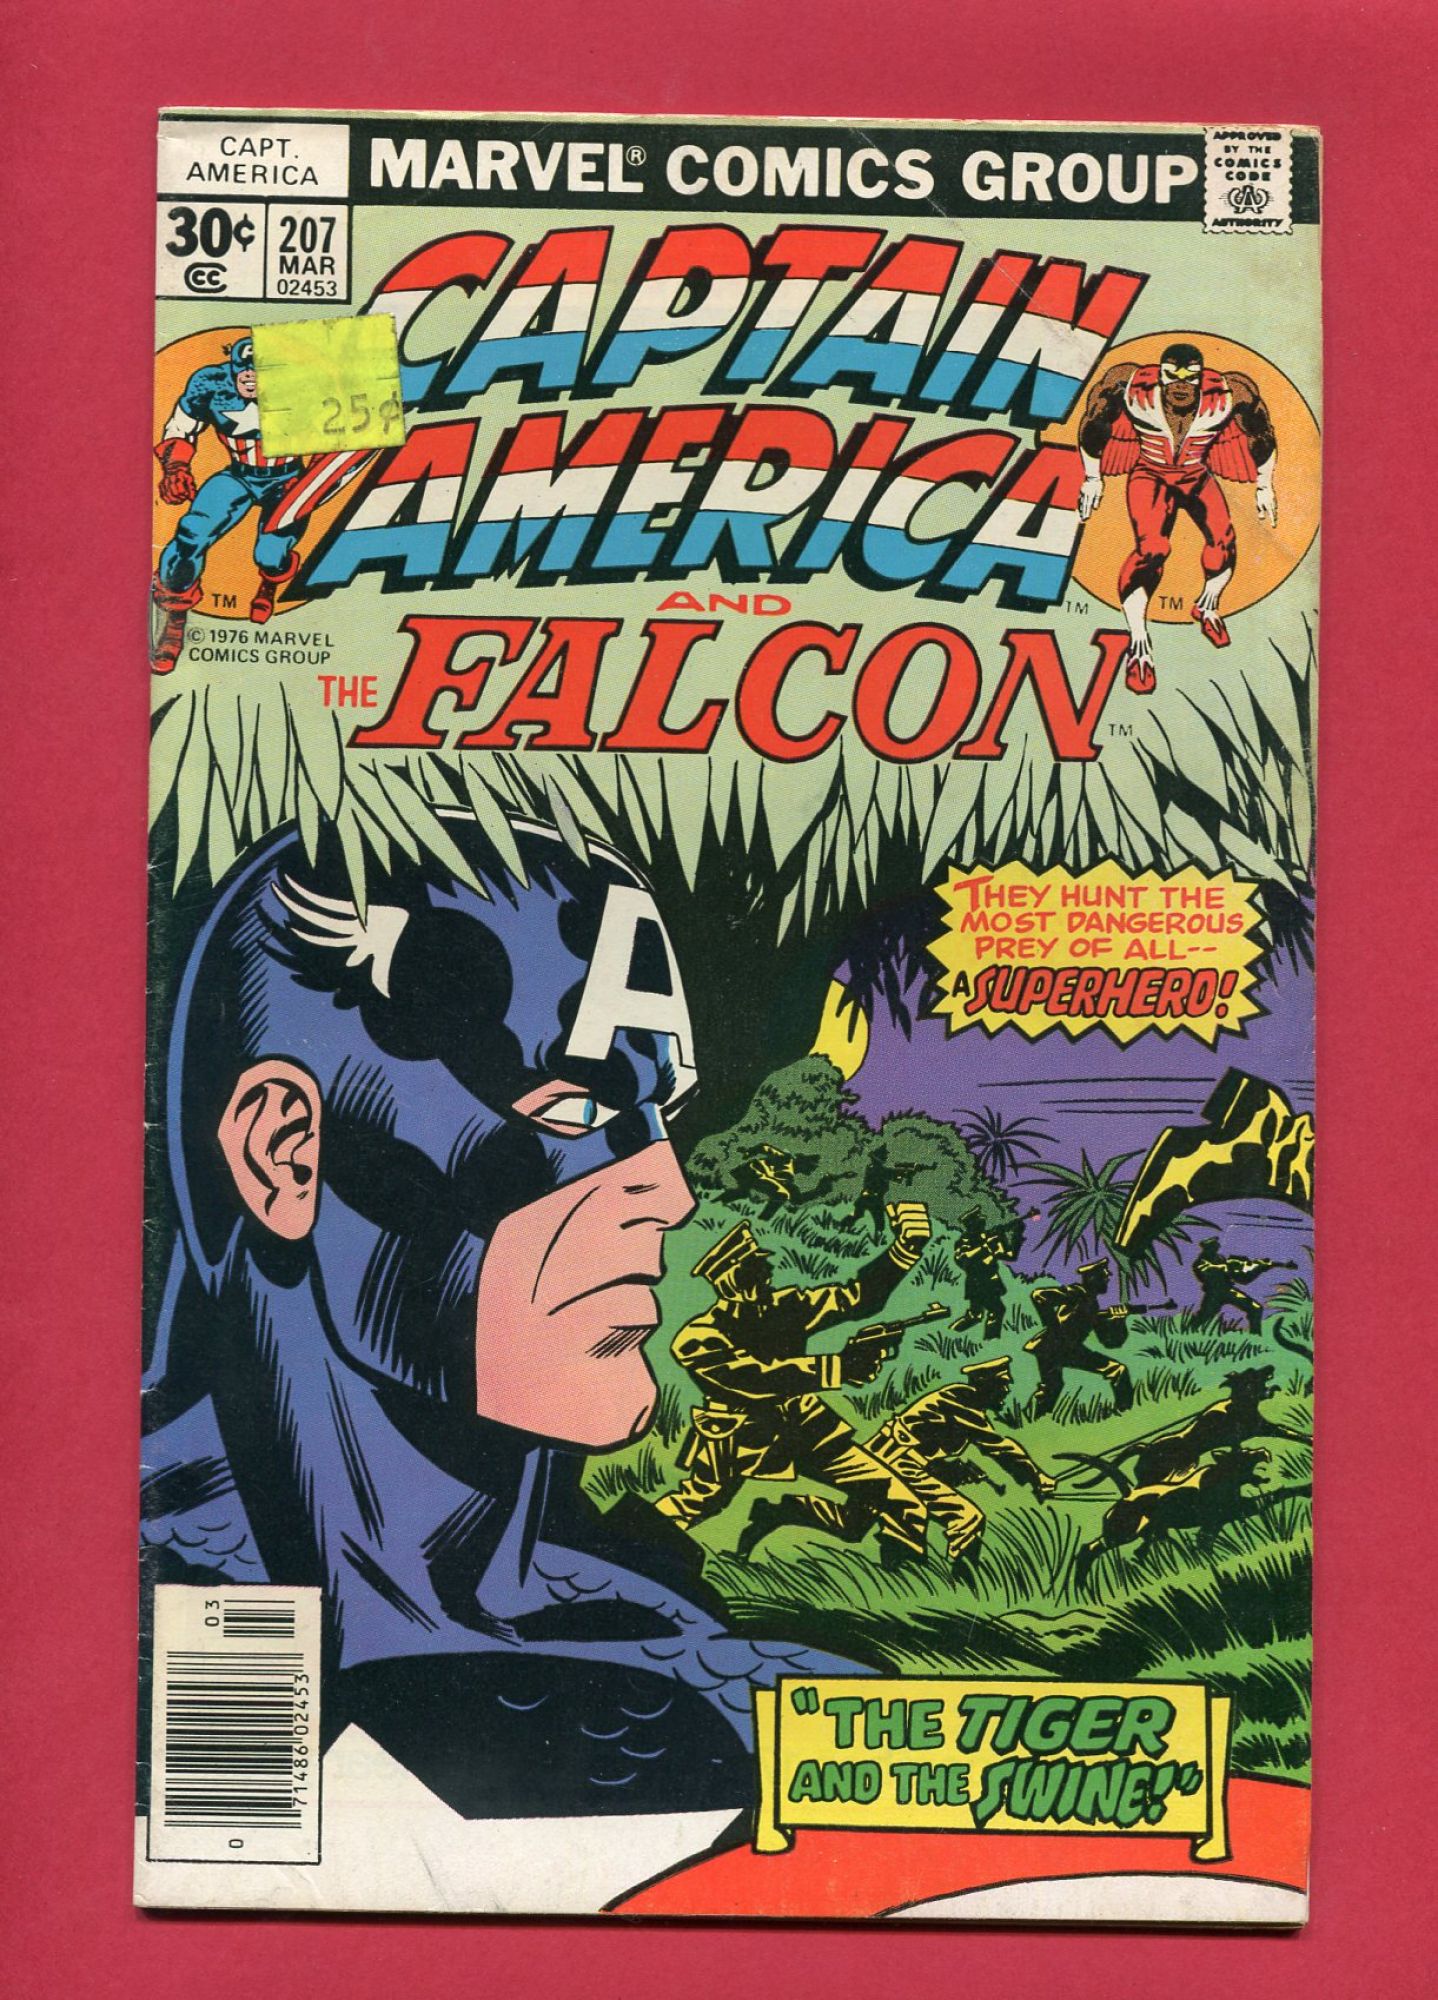 Captain America #207, Mar 1977, 4.5 VG+